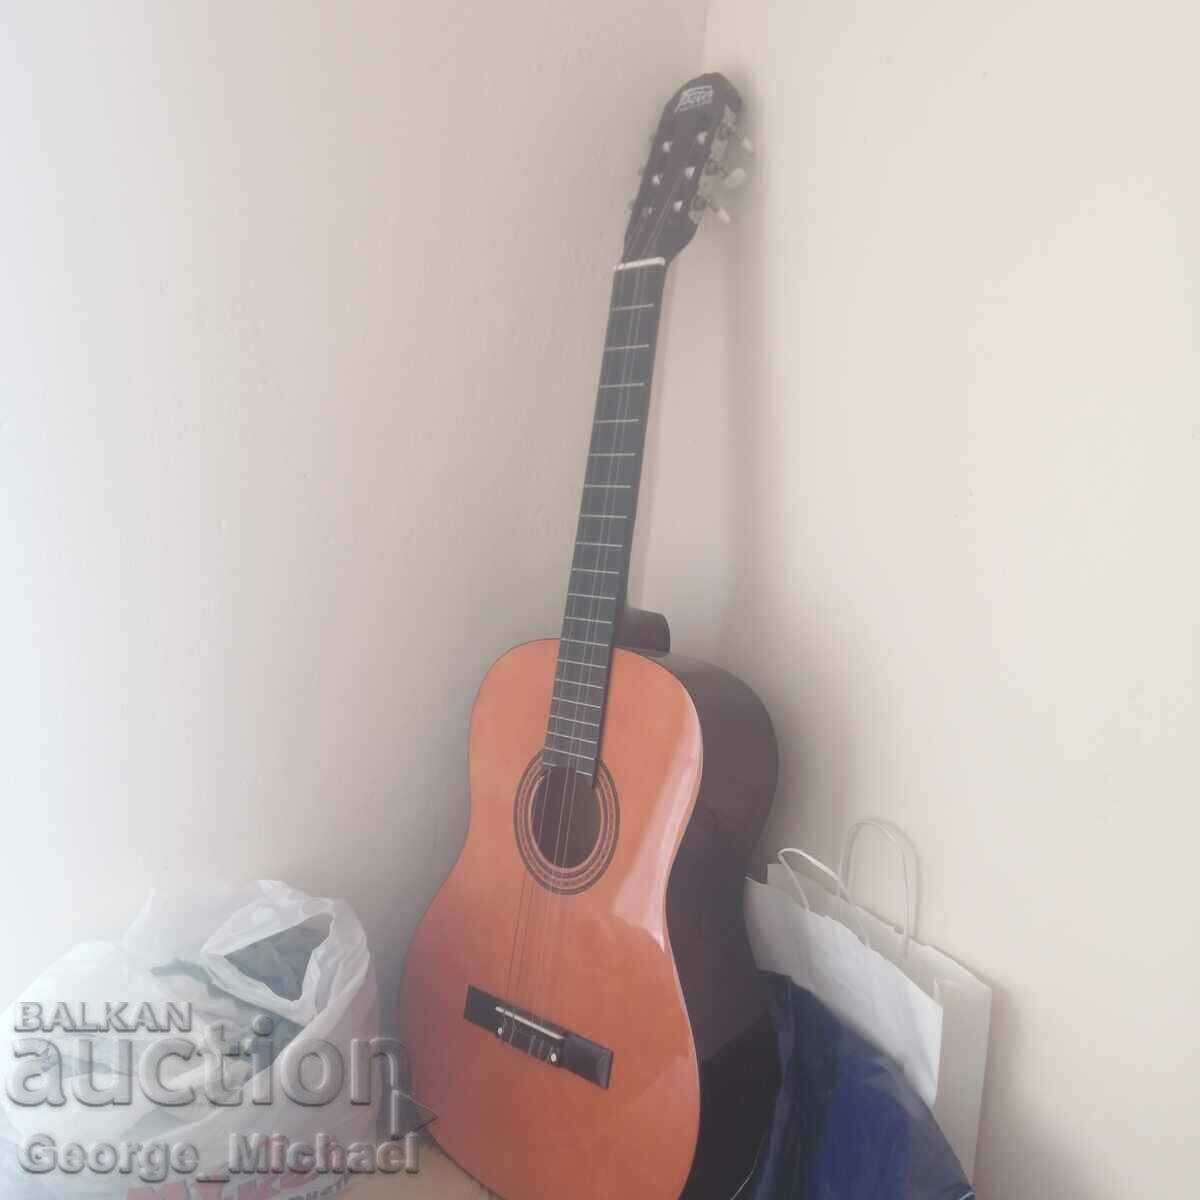 Factor guitar in good condition